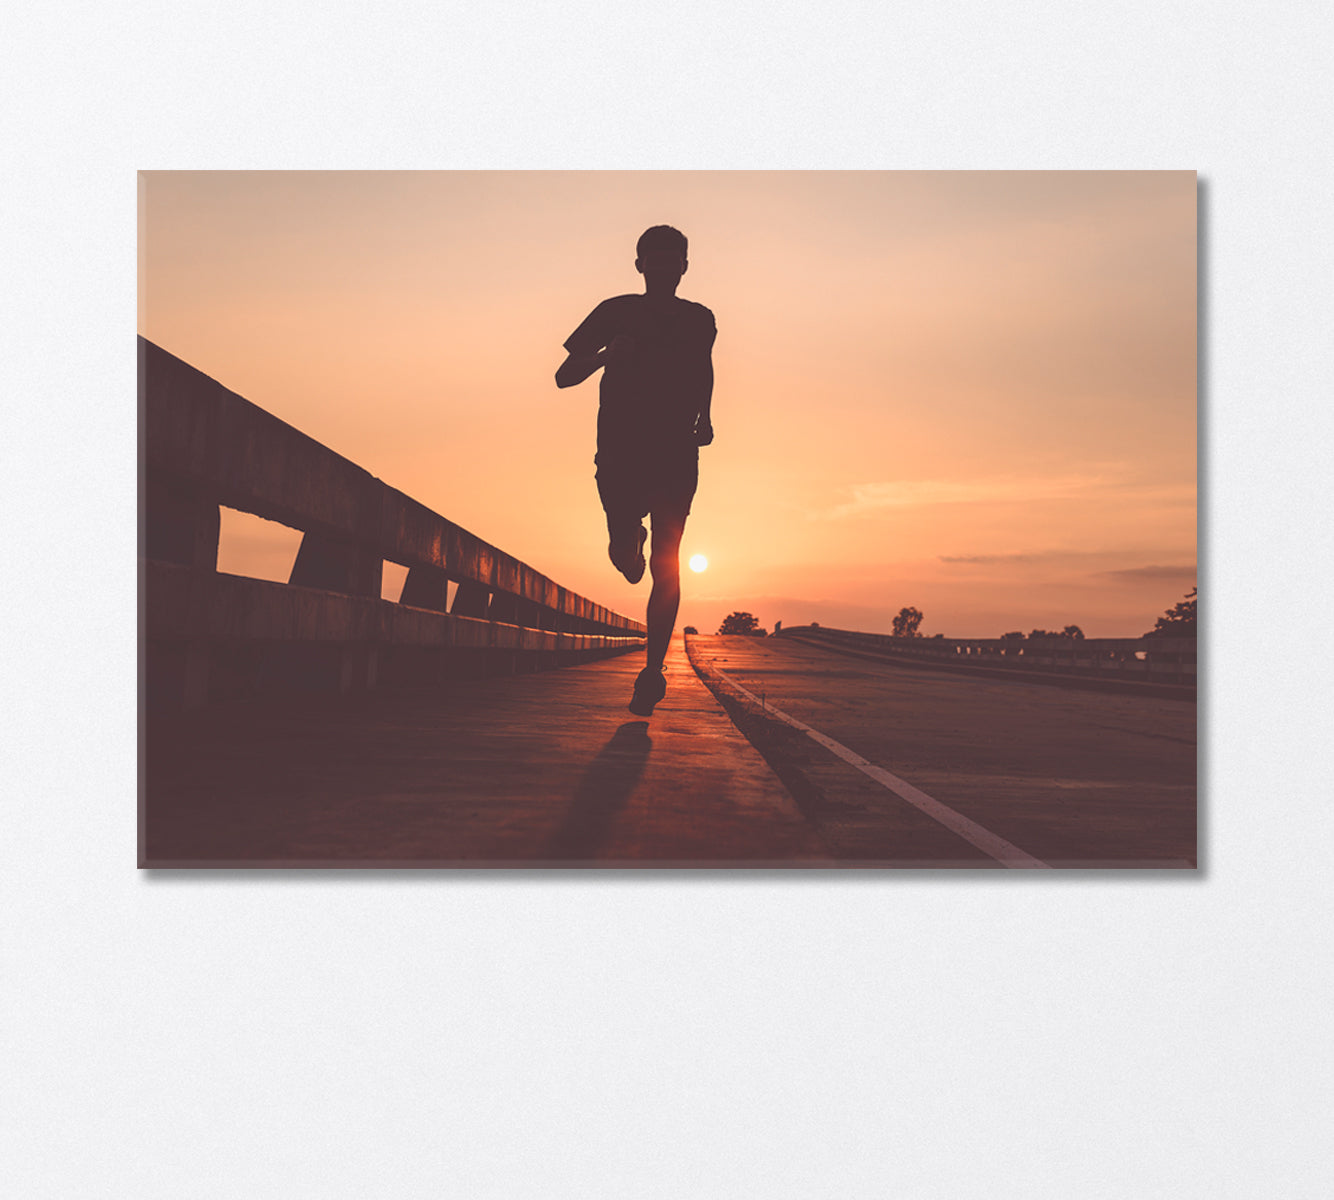 Running Athlete Outdoors in Sunset Canvas Print-Canvas Print-CetArt-1 Panel-24x16 inches-CetArt